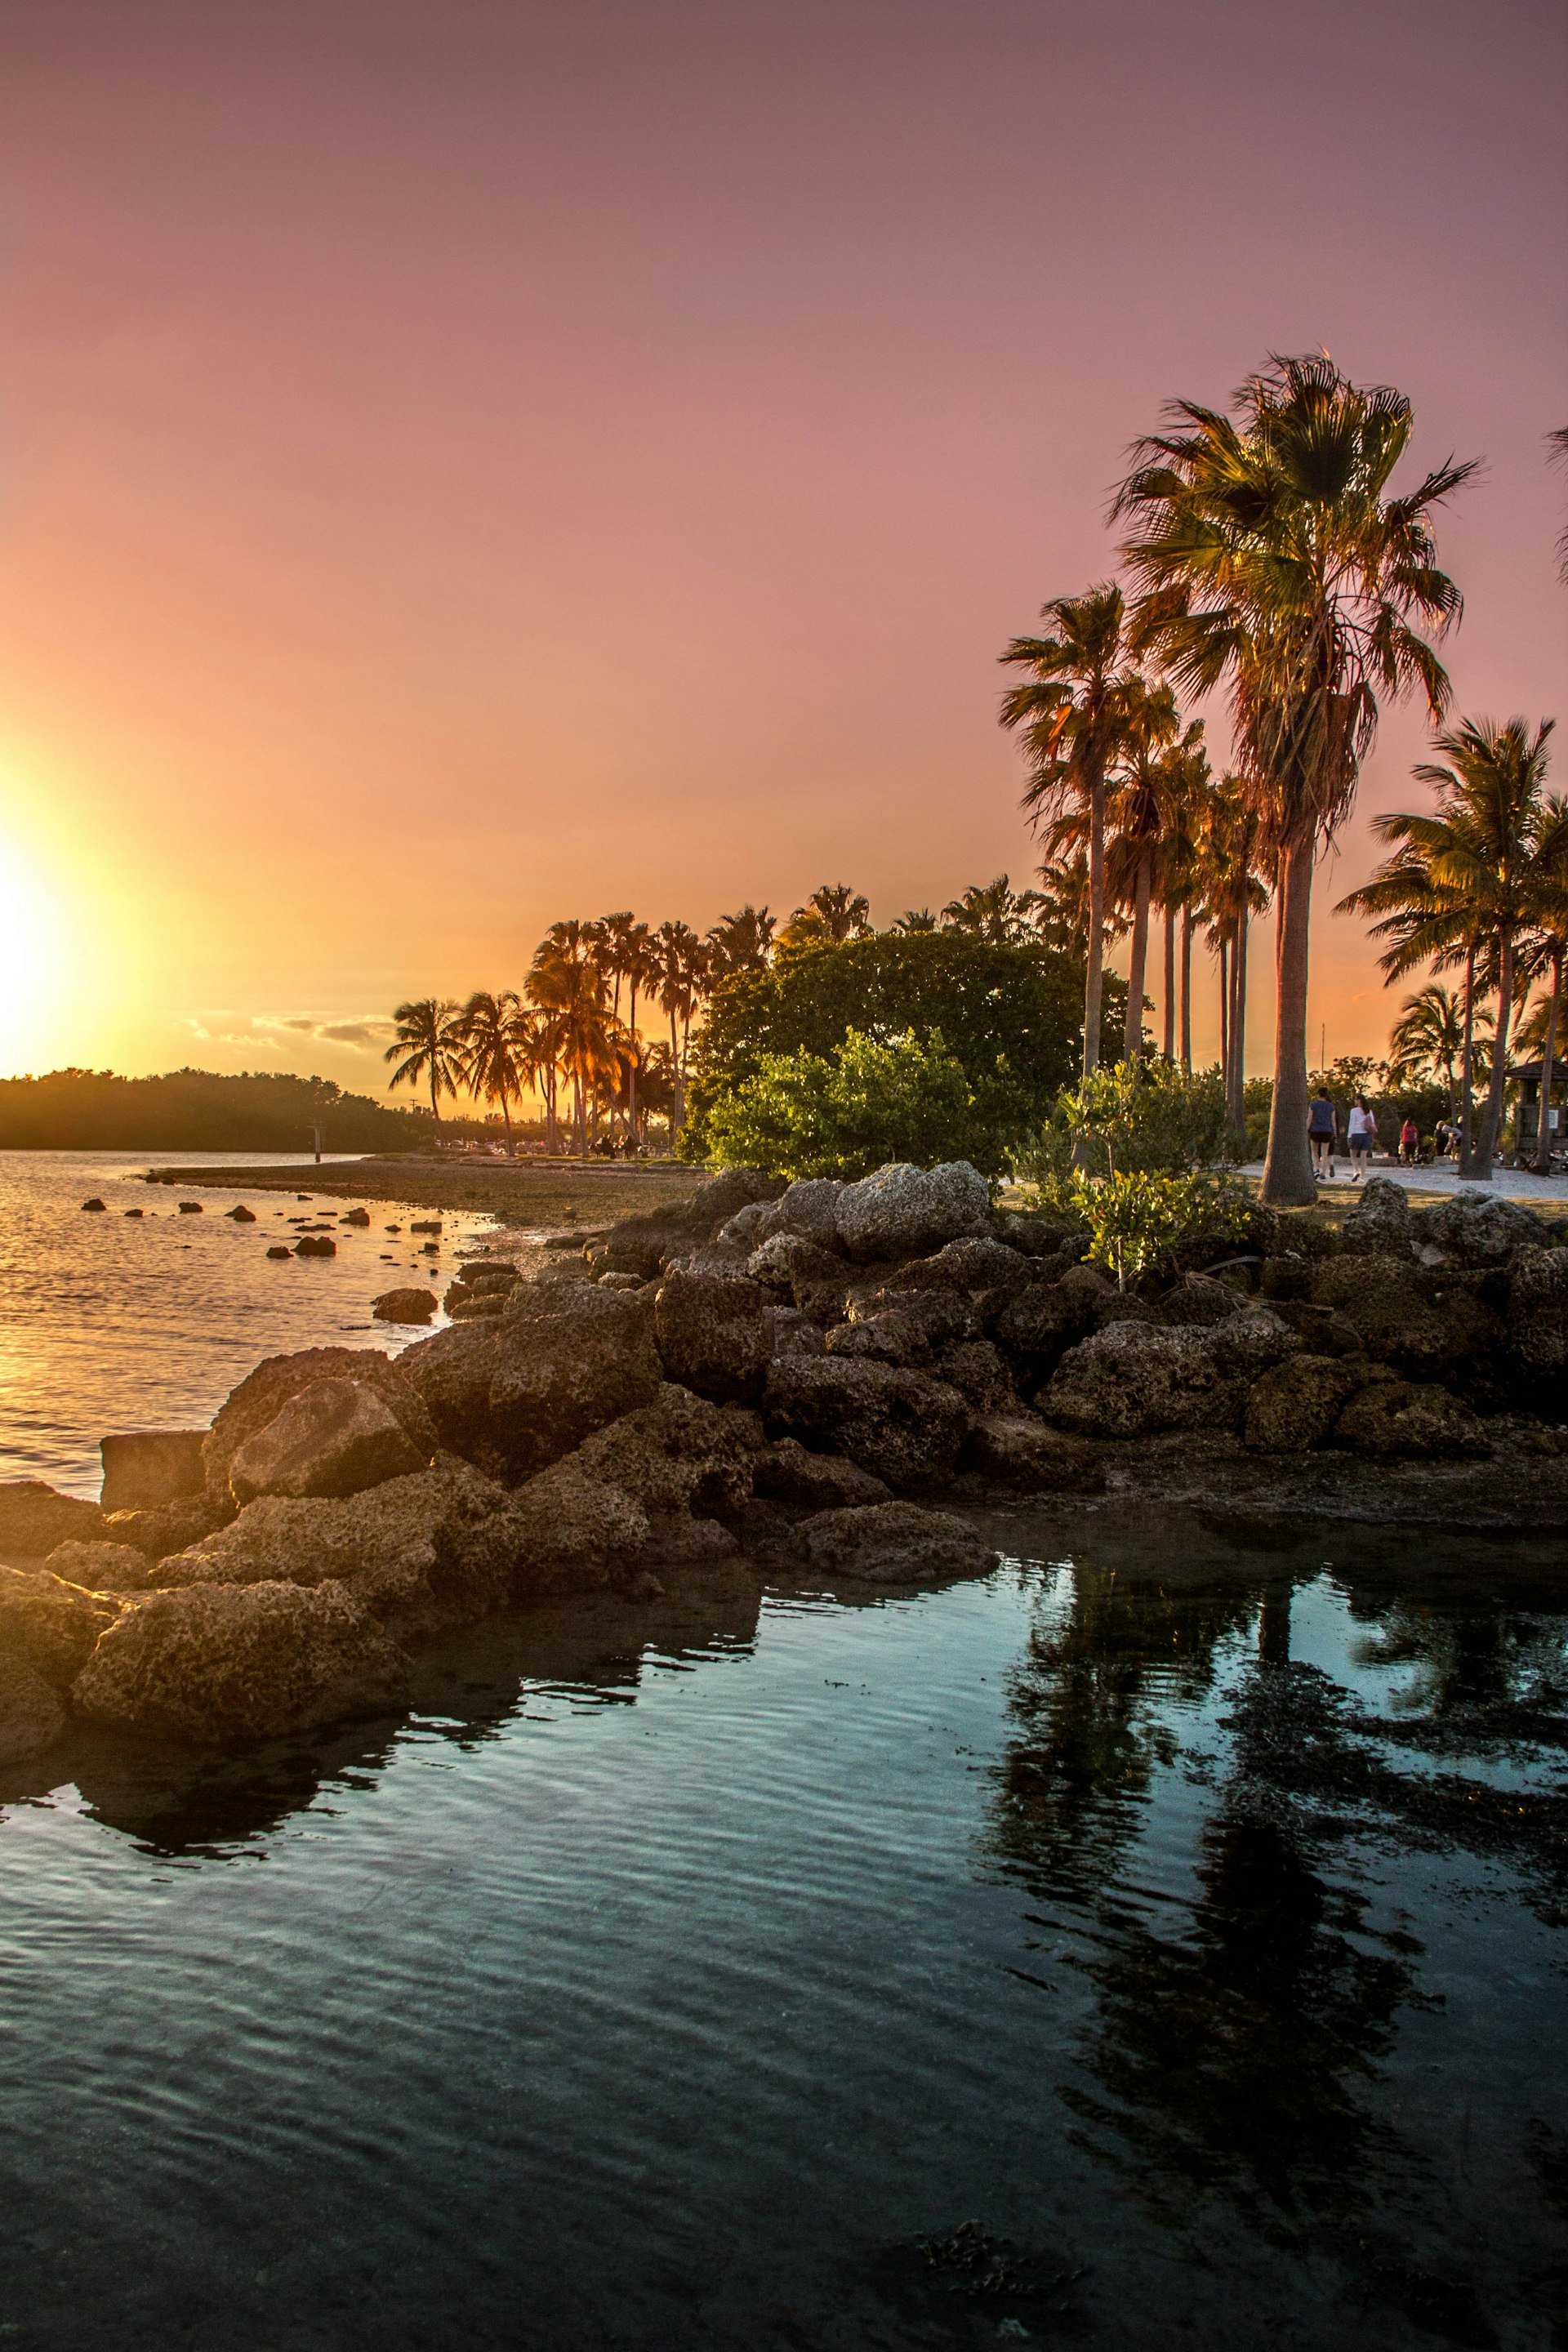 Sunset over a rocky coastal area with palm trees